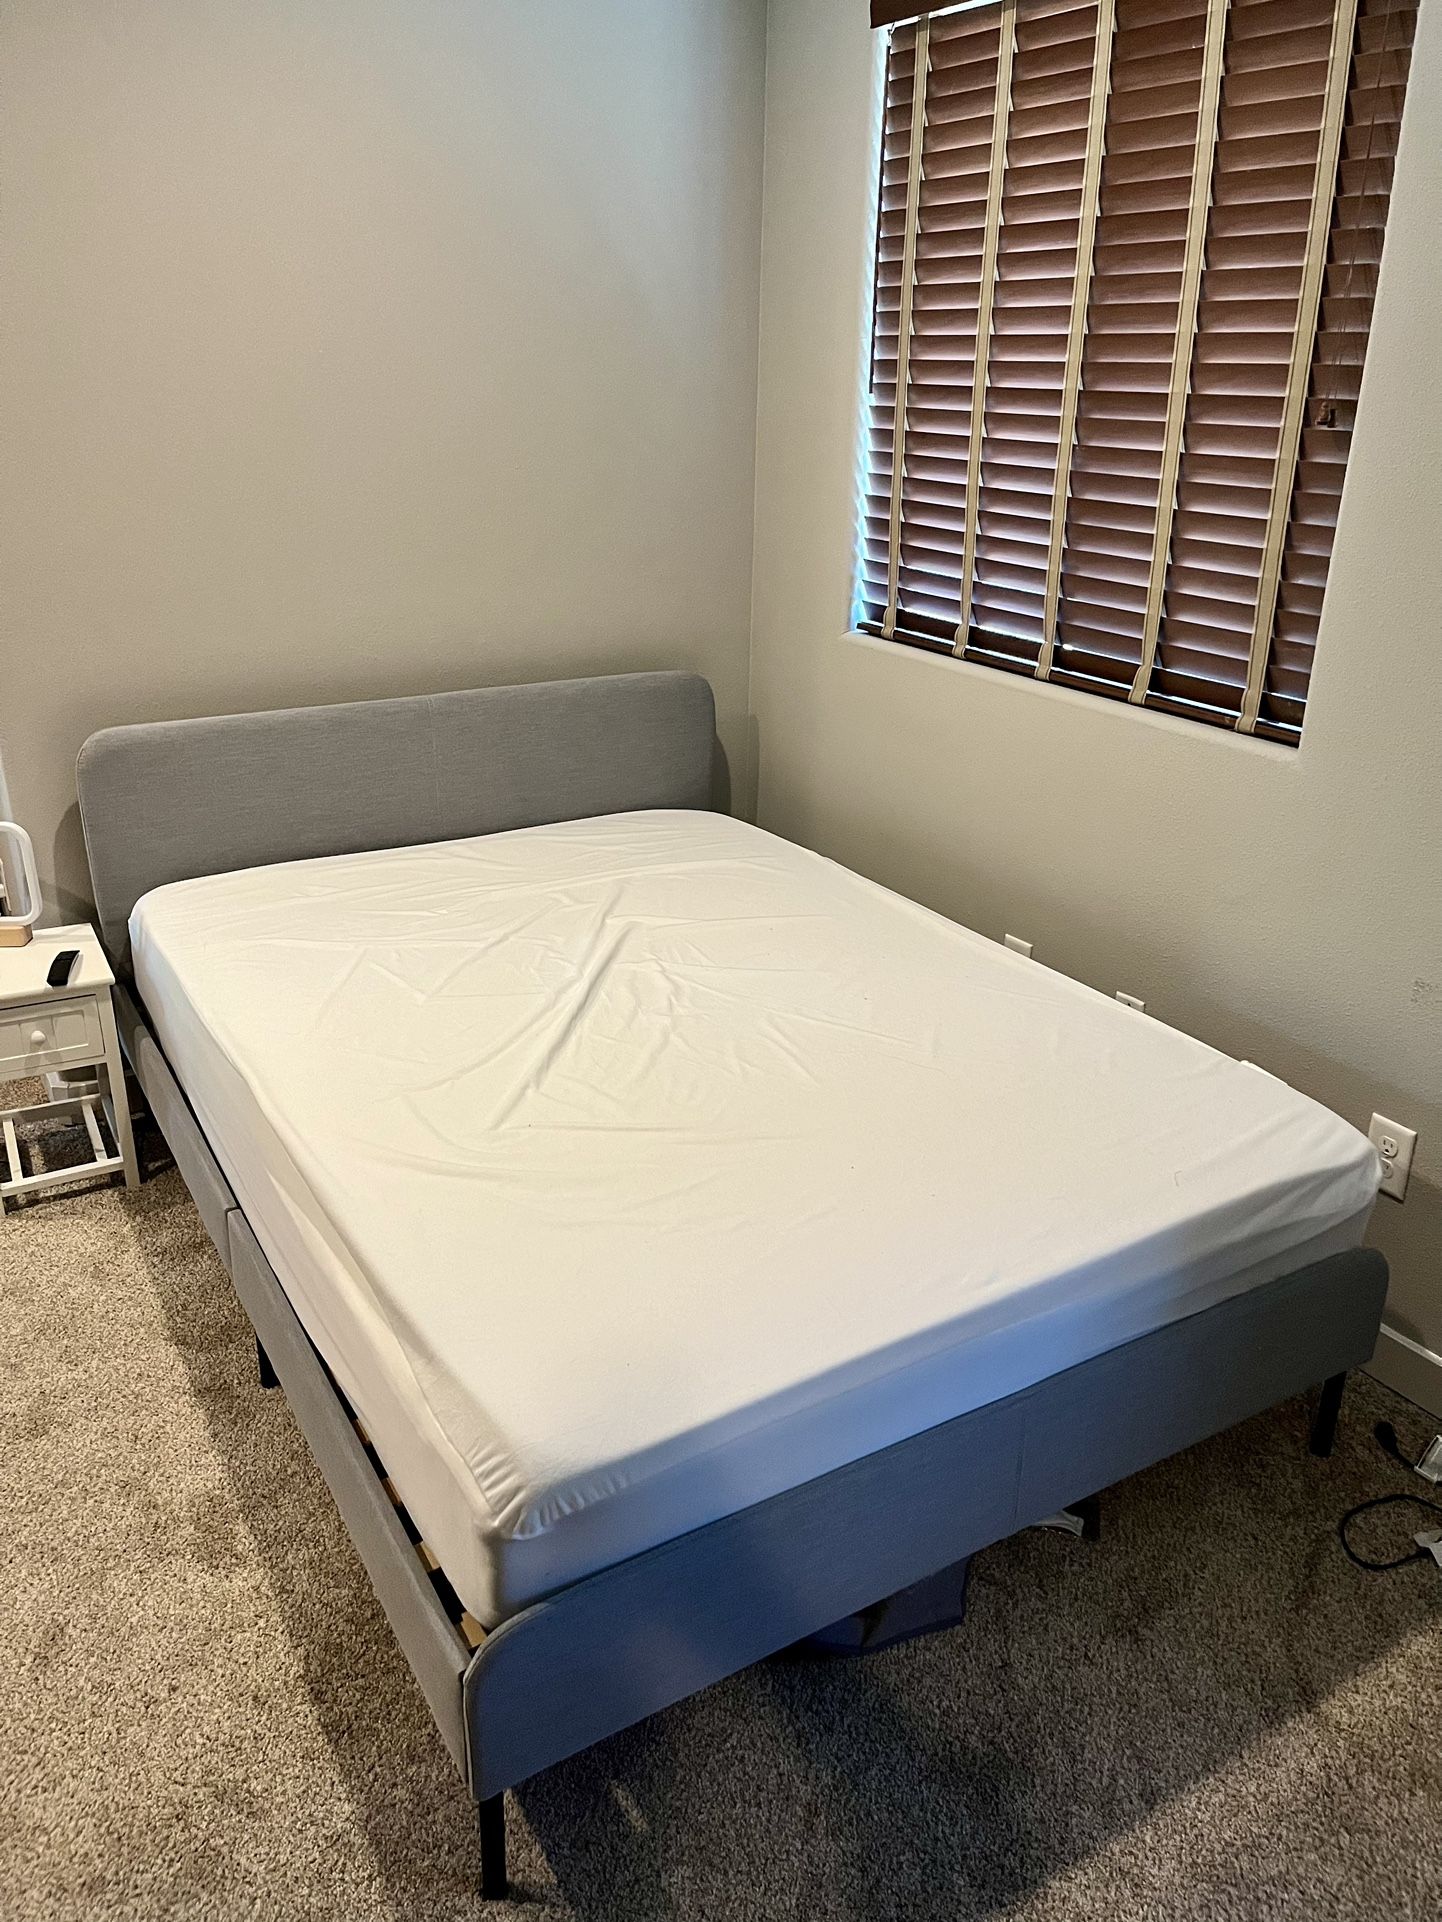 Full-sized Mattress & Bed Frame